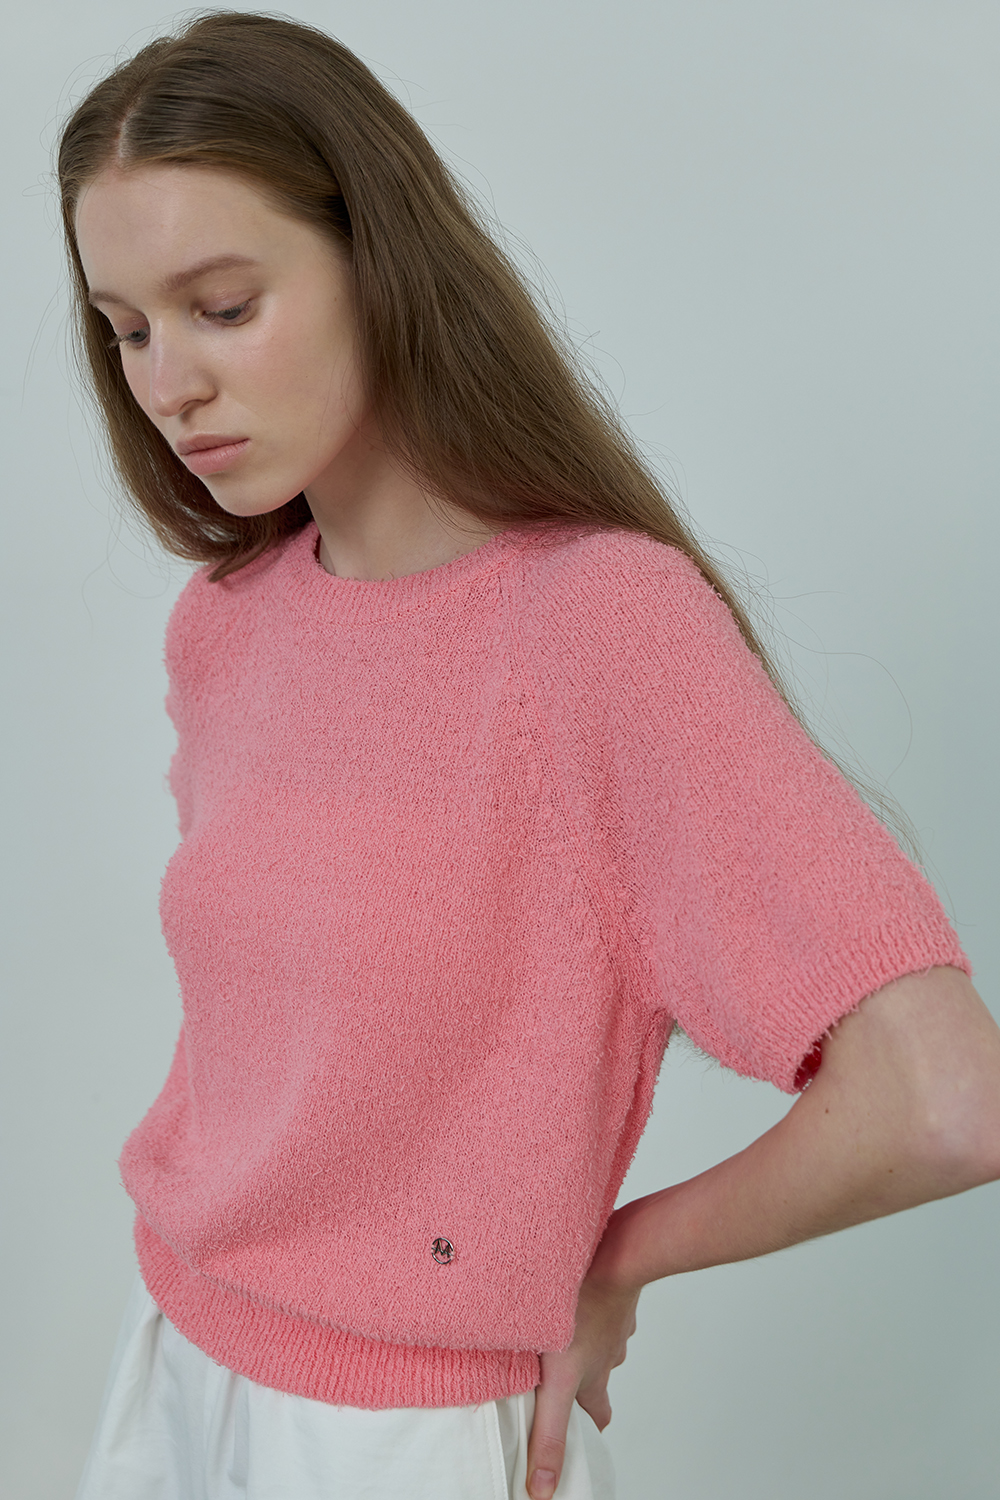 Pop color knit_(pink)